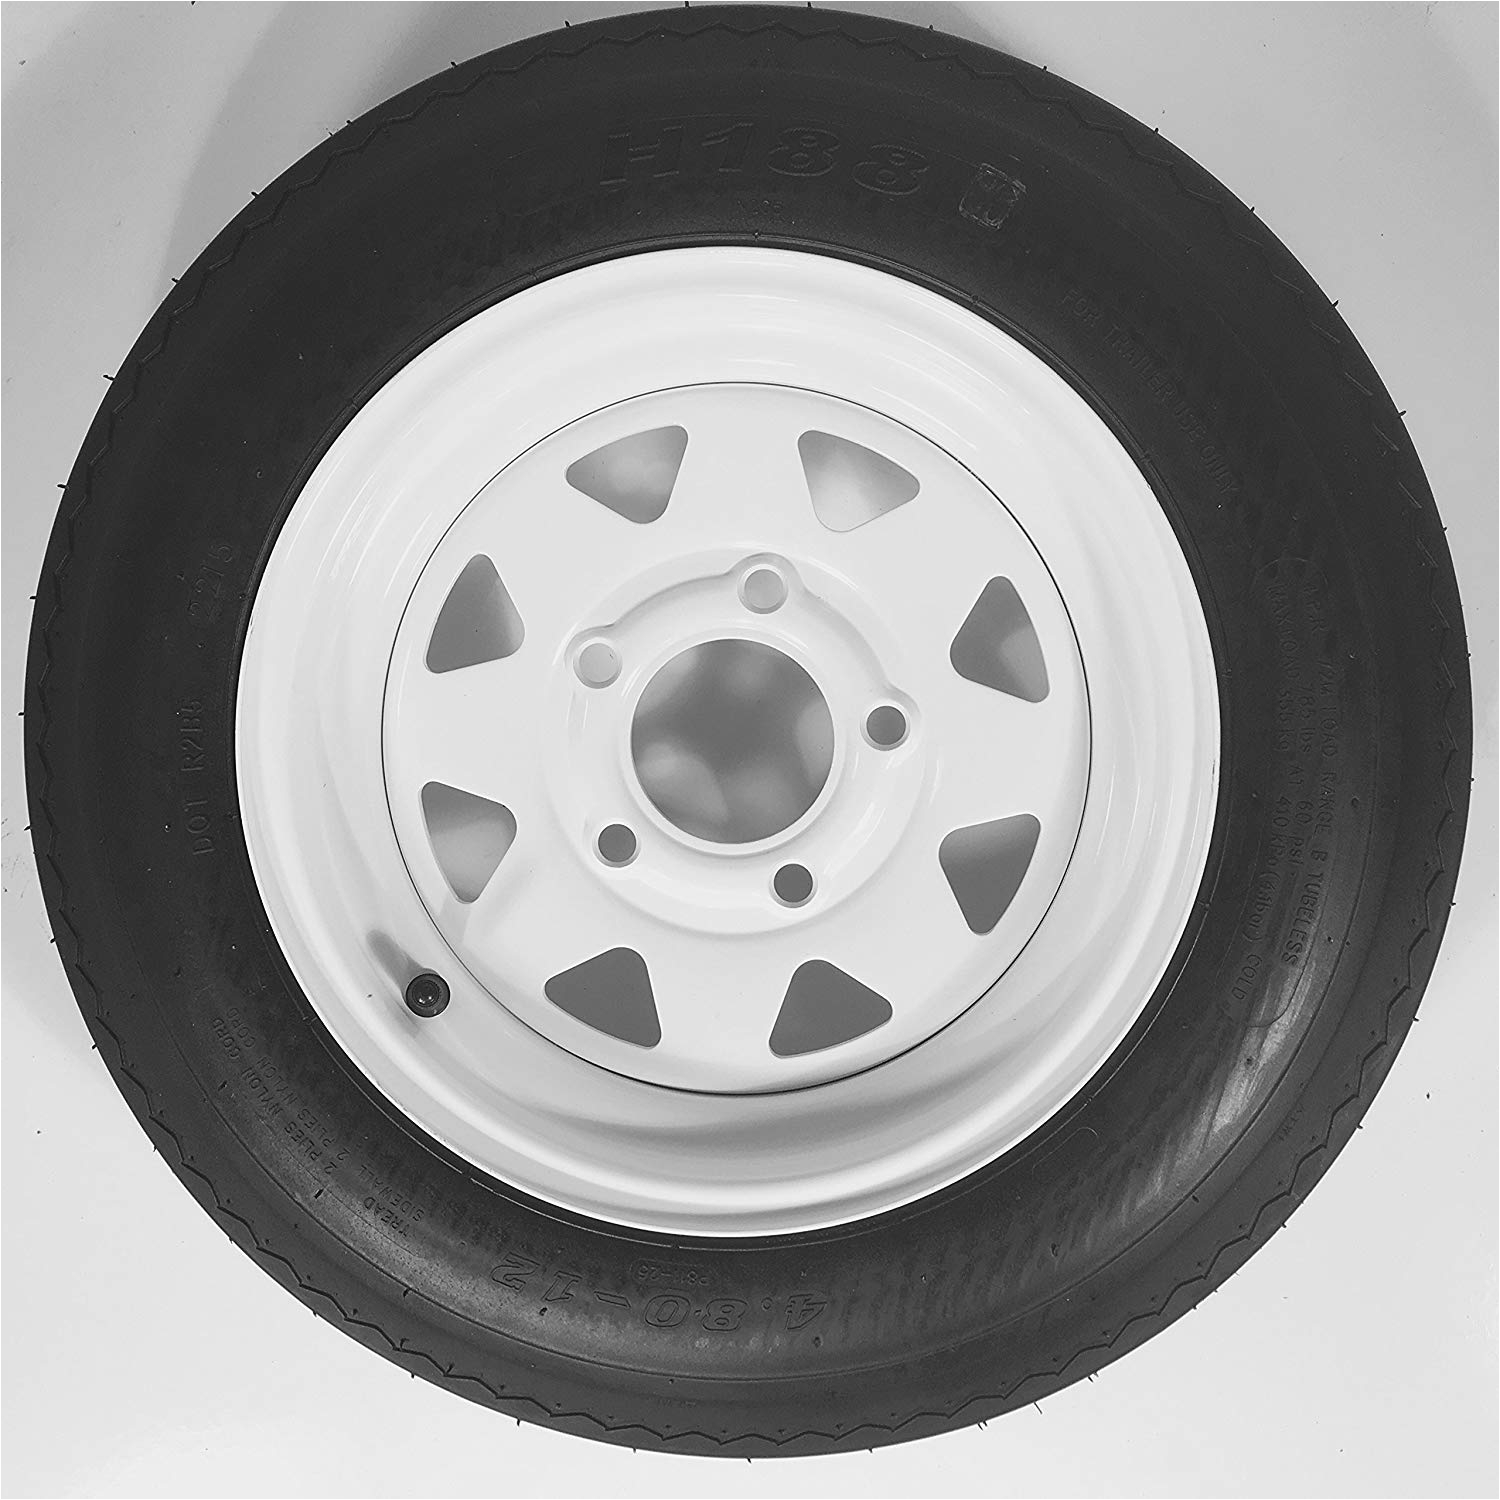 amazon com ecustomrim trailer tire rim 4 80 12 480 12 4 80 x 12 12 lrb 5 lug white wheel spoke automotive